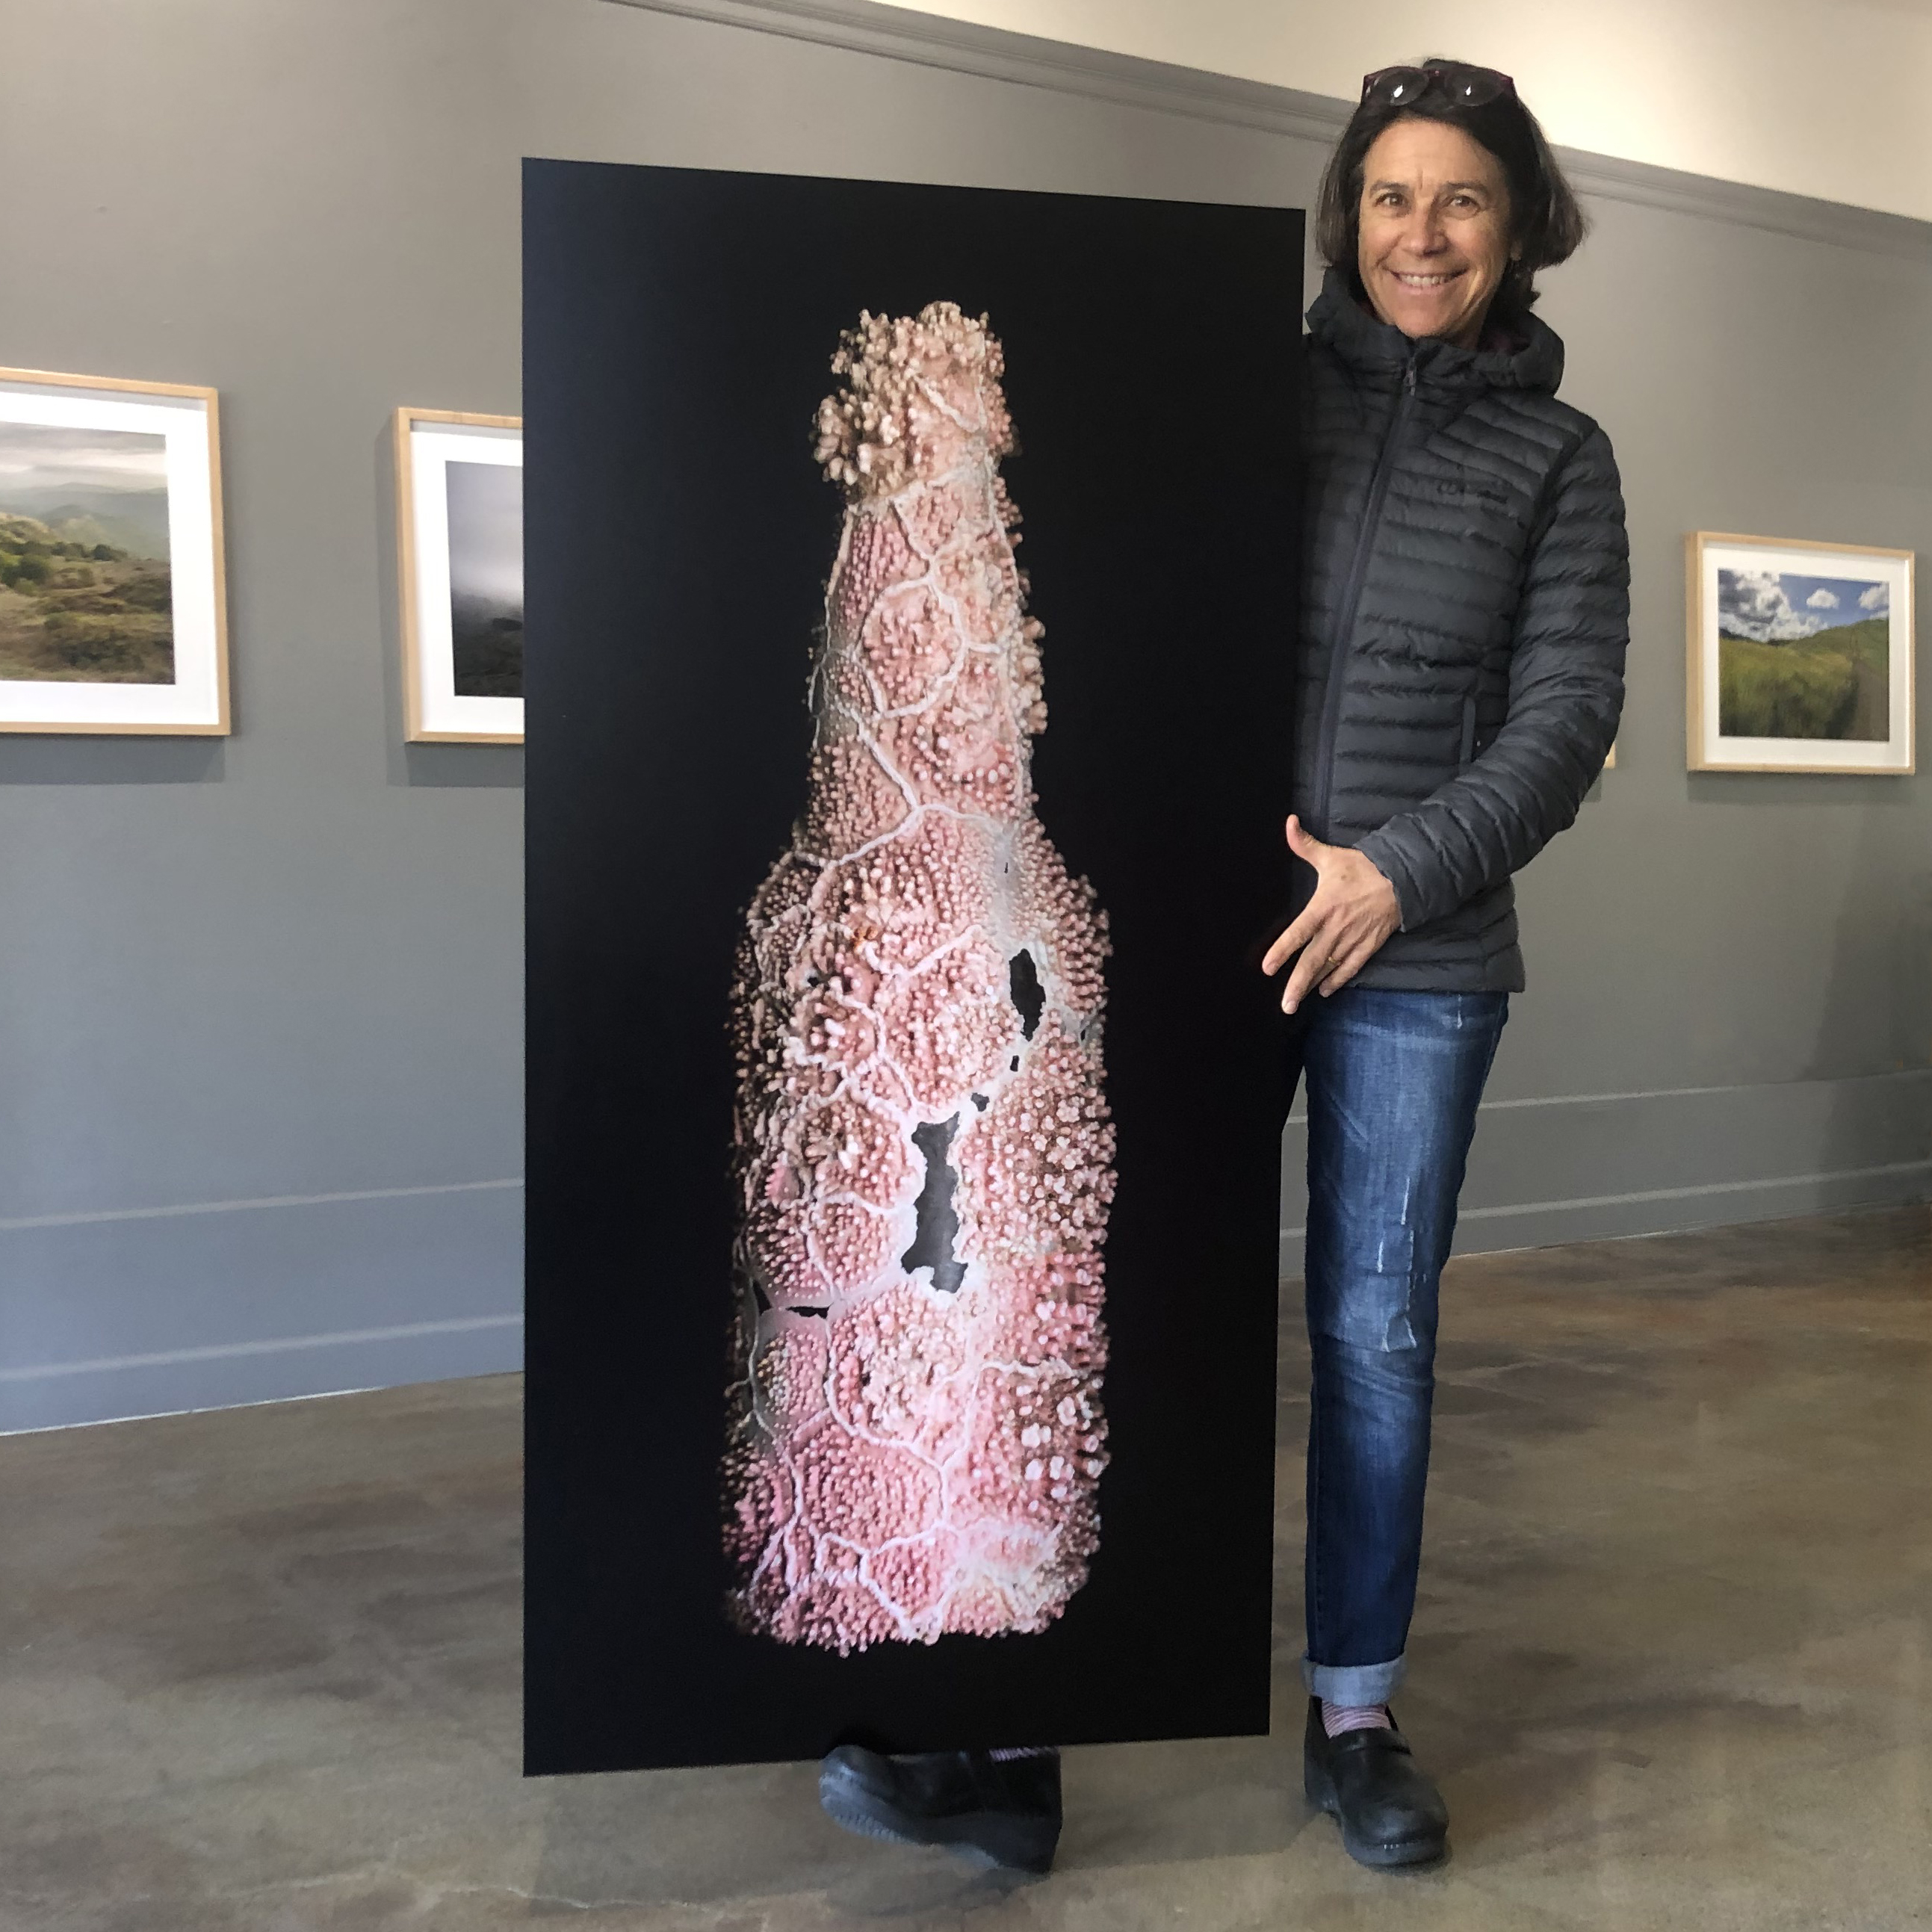 Artist Josie with art "Pink Coral in Algae"